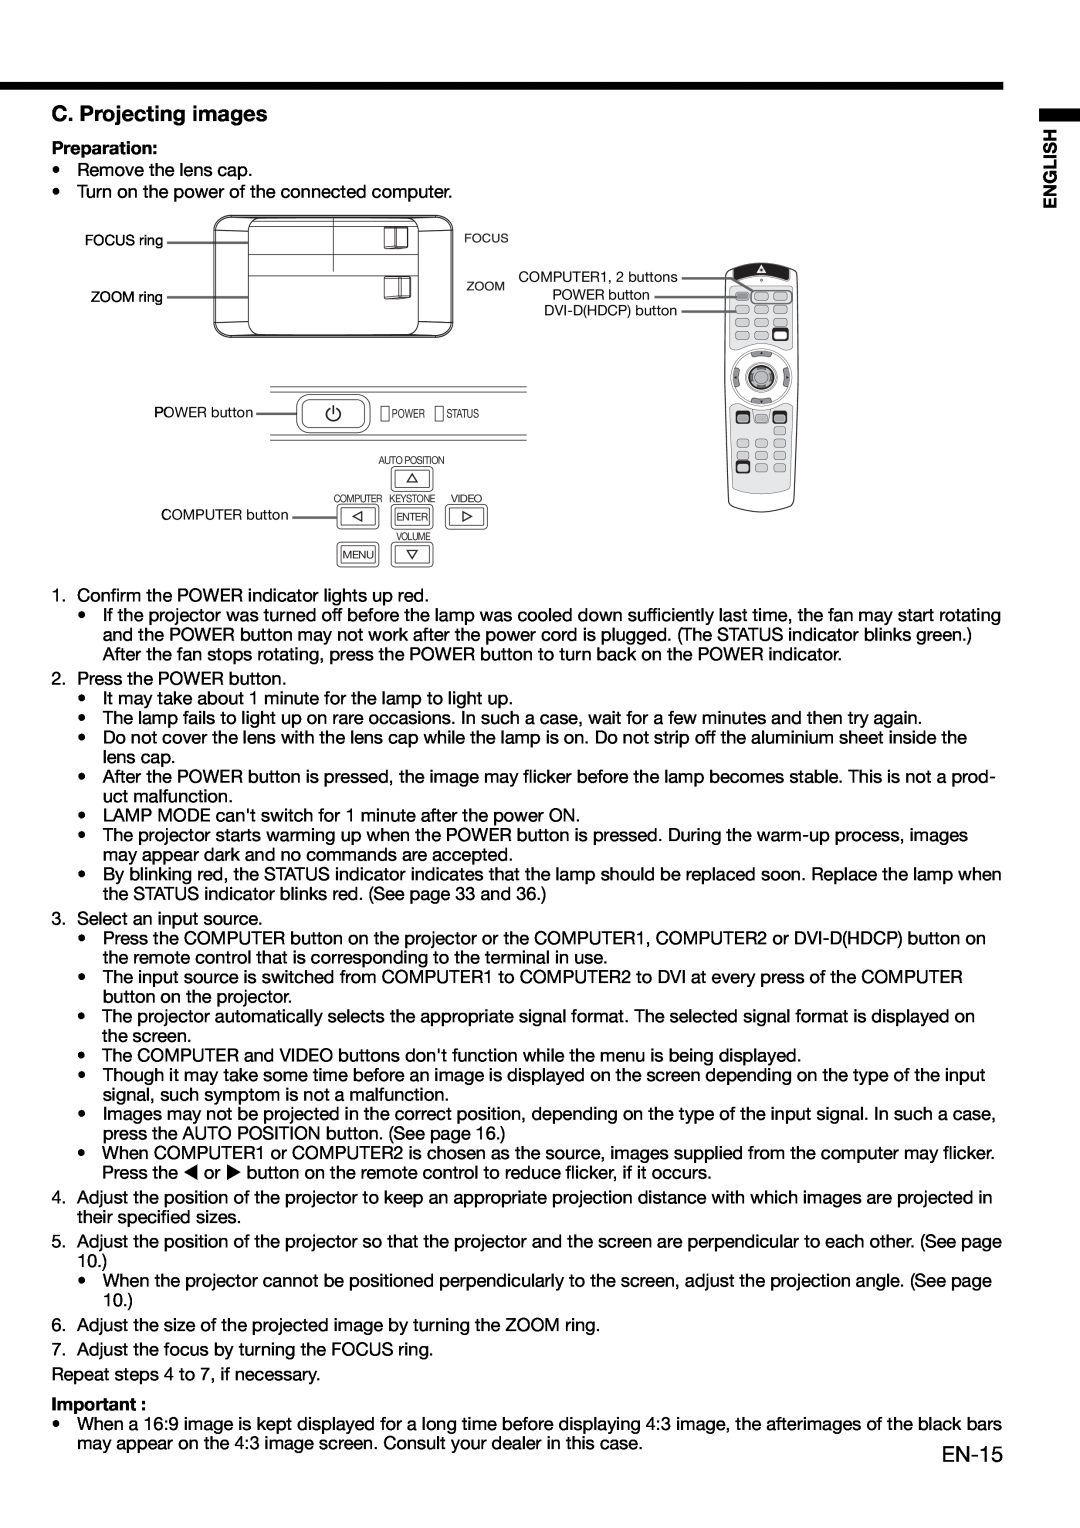 Mitsubishi Electronics XD490U user manual C. Projecting images, Preparation, English 